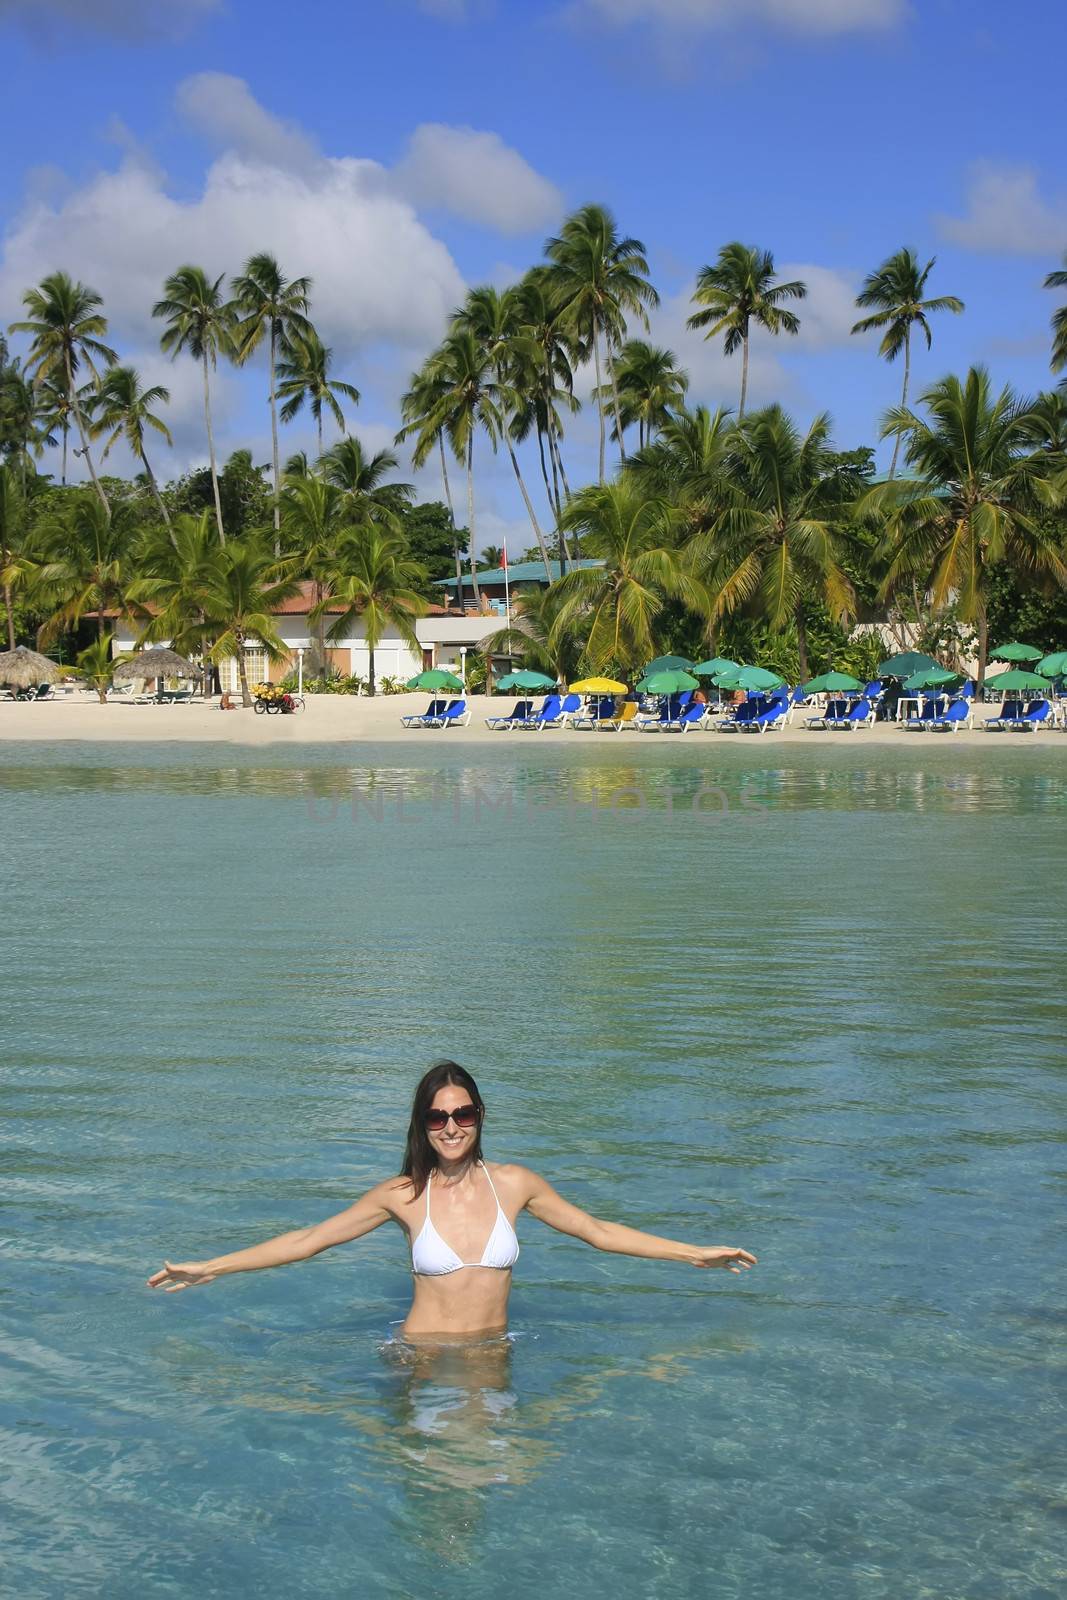 Young woman in bikini standing in clear water, Boca Chica beach, Dominican Republic